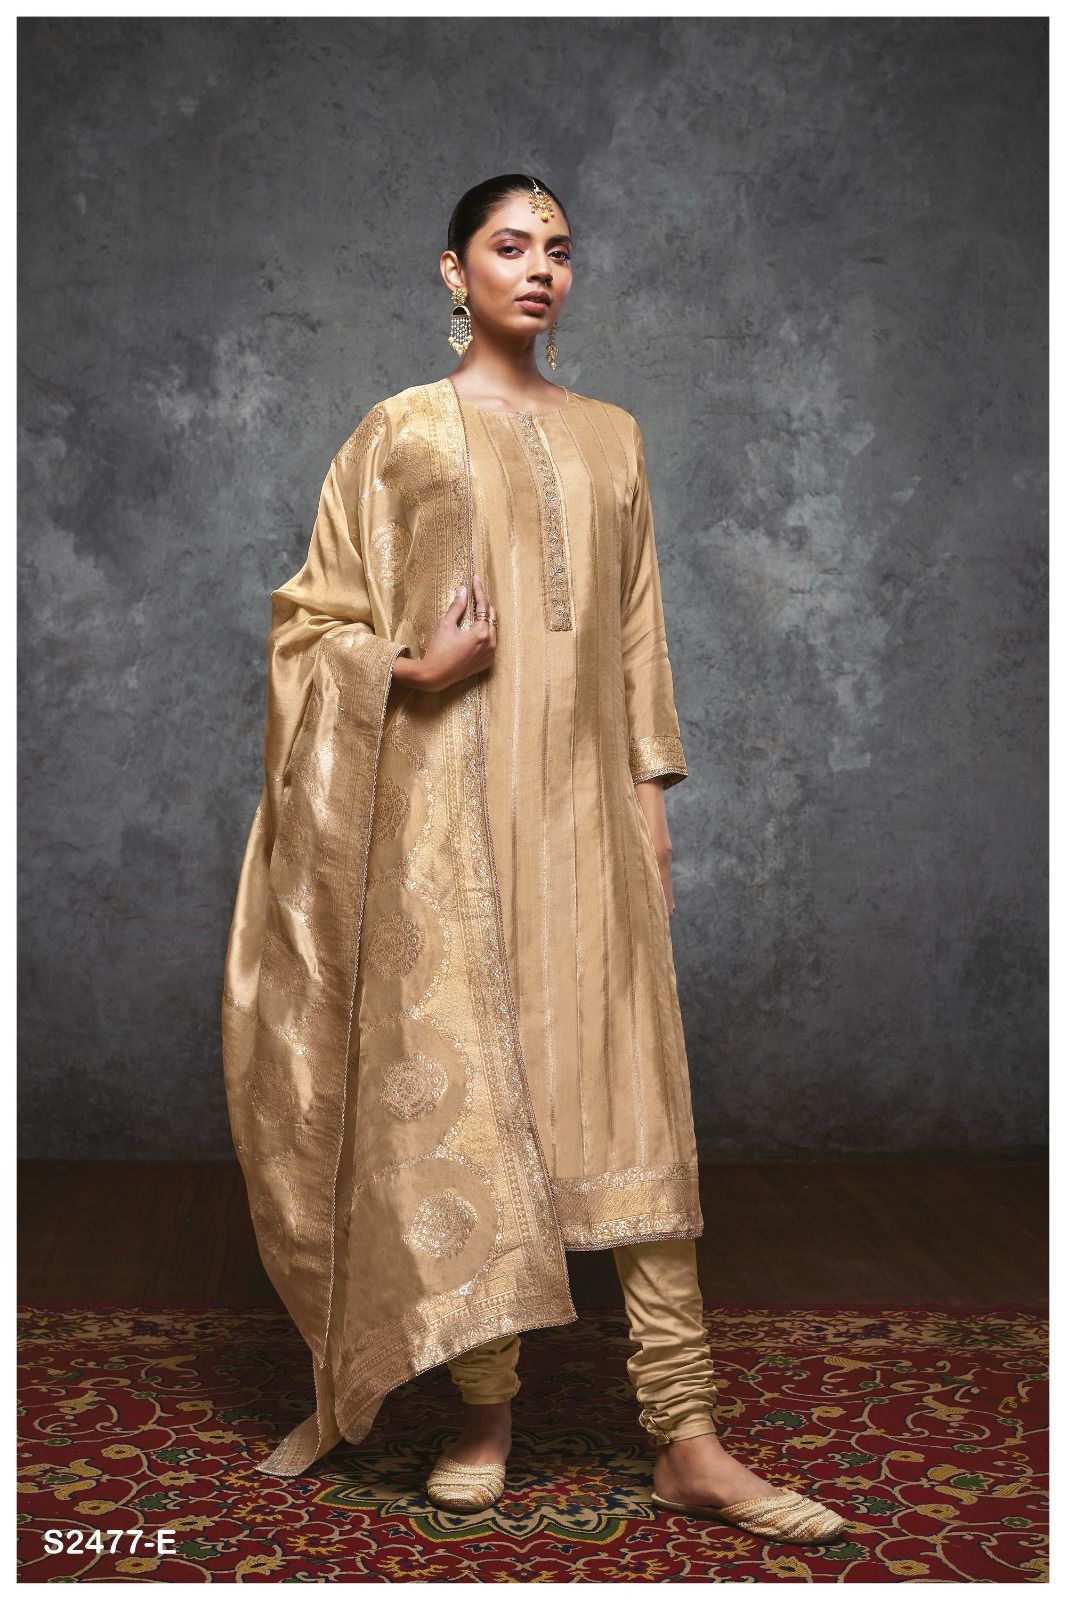 Tamyra 2477 Ganga Organic Plazzo Style Suits Manufacturer India